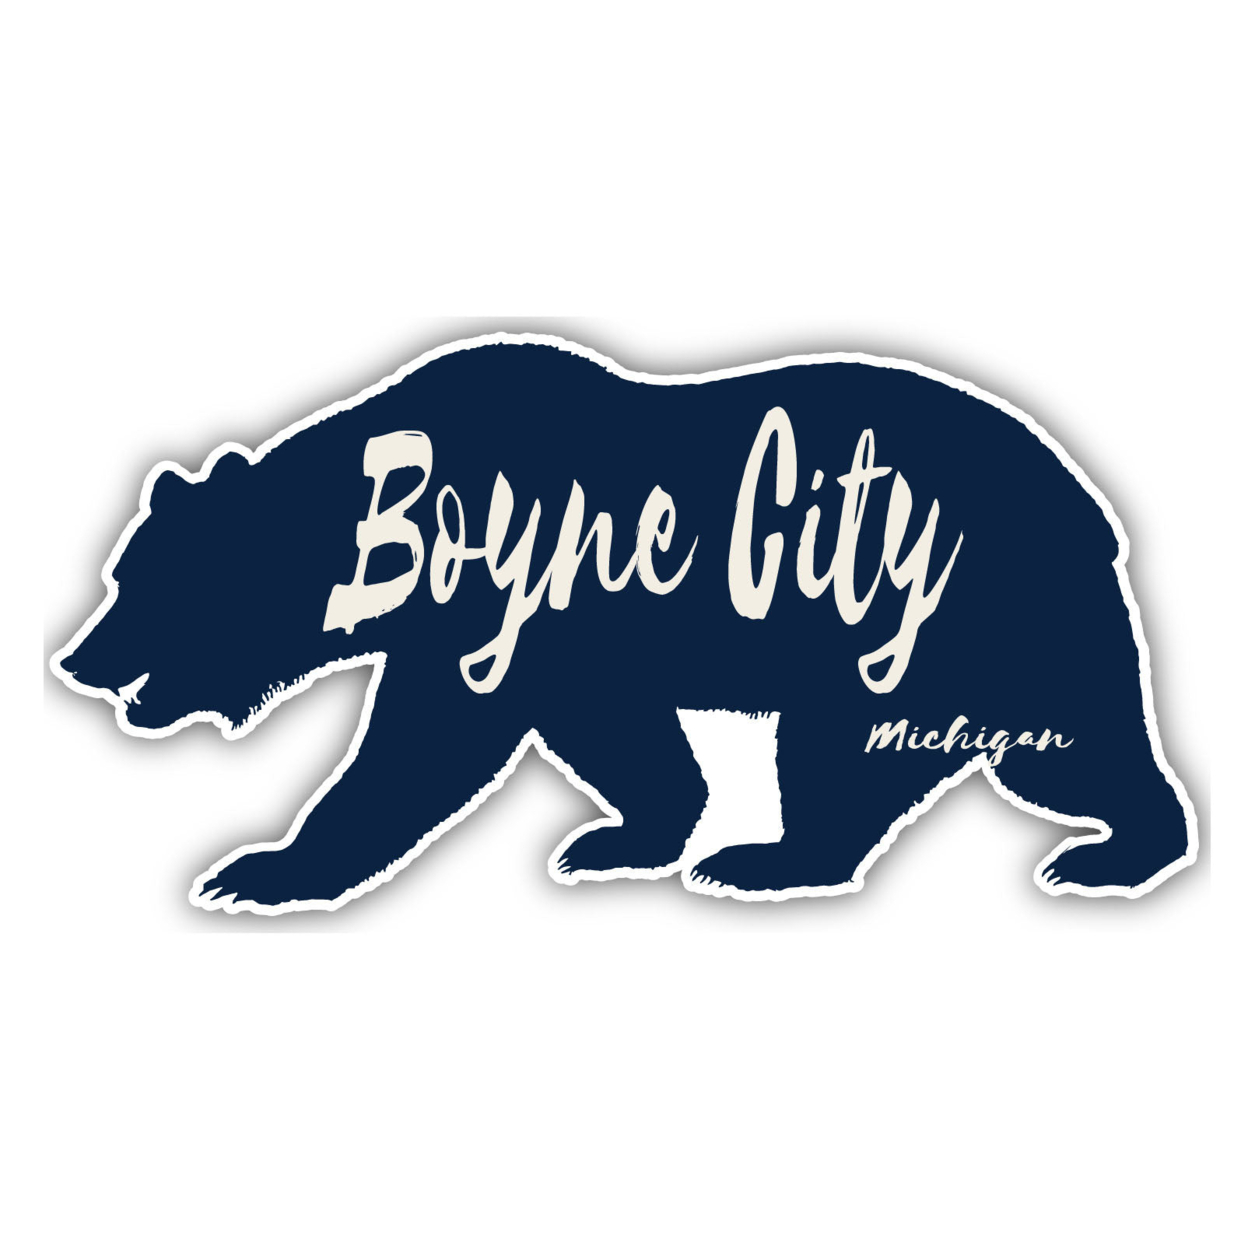 Boyne City Michigan Souvenir Decorative Stickers (Choose Theme And Size) - 4-Pack, 6-Inch, Adventures Awaits